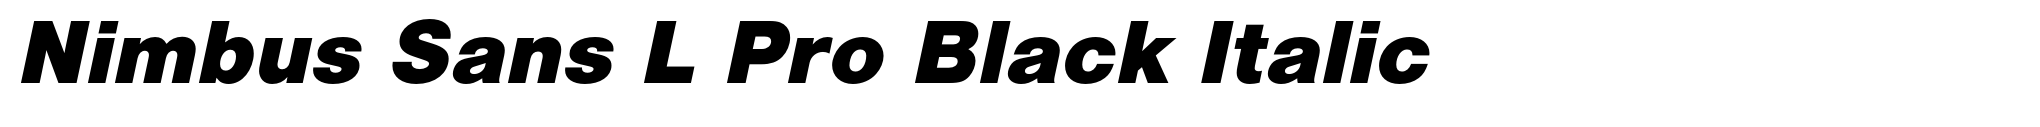 Nimbus Sans L Pro Black Italic image